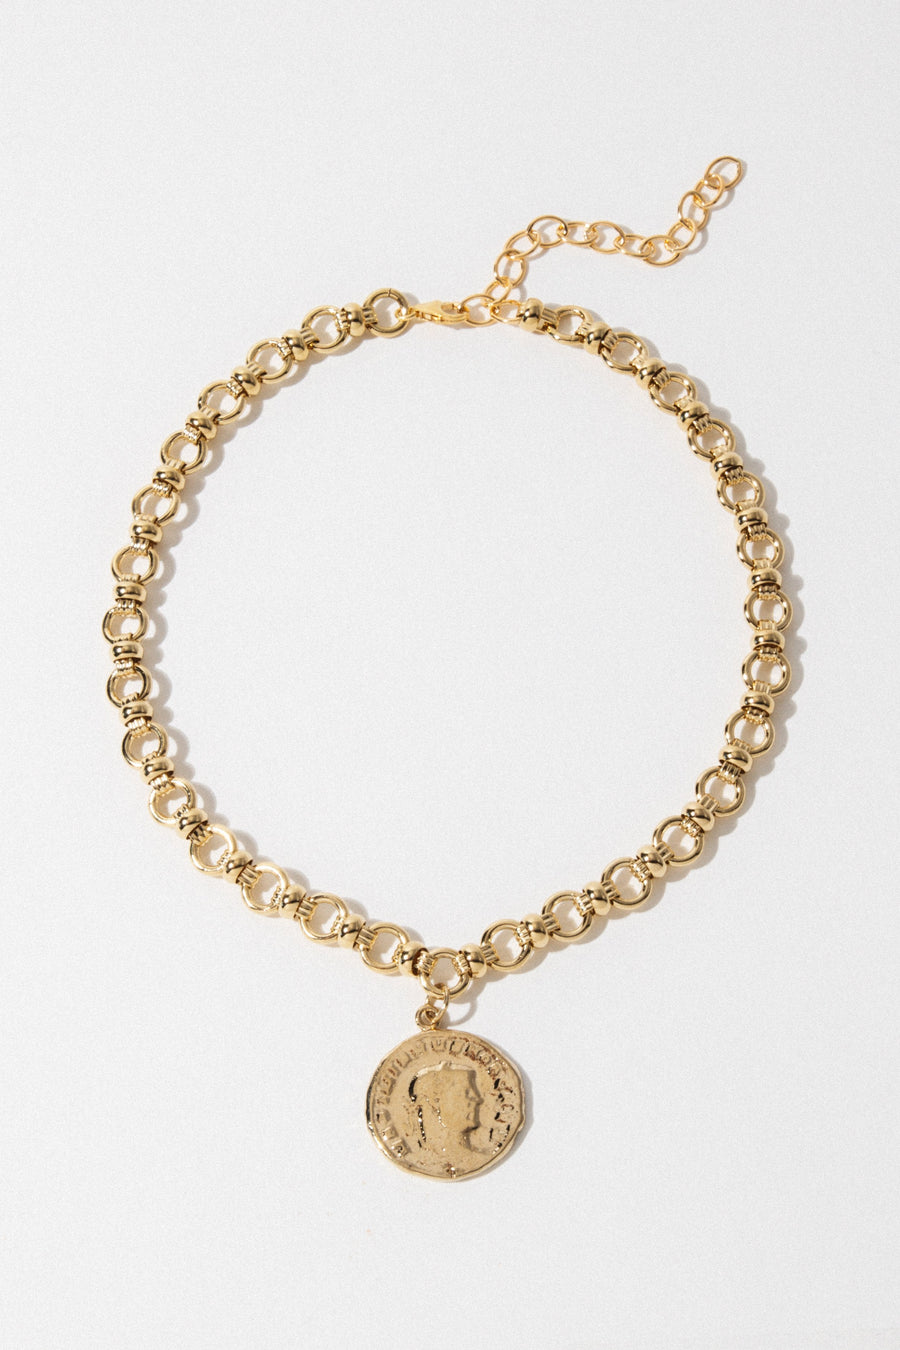 Goddess Jewelry Gold / 13 Inches Pertinax Coin Choker